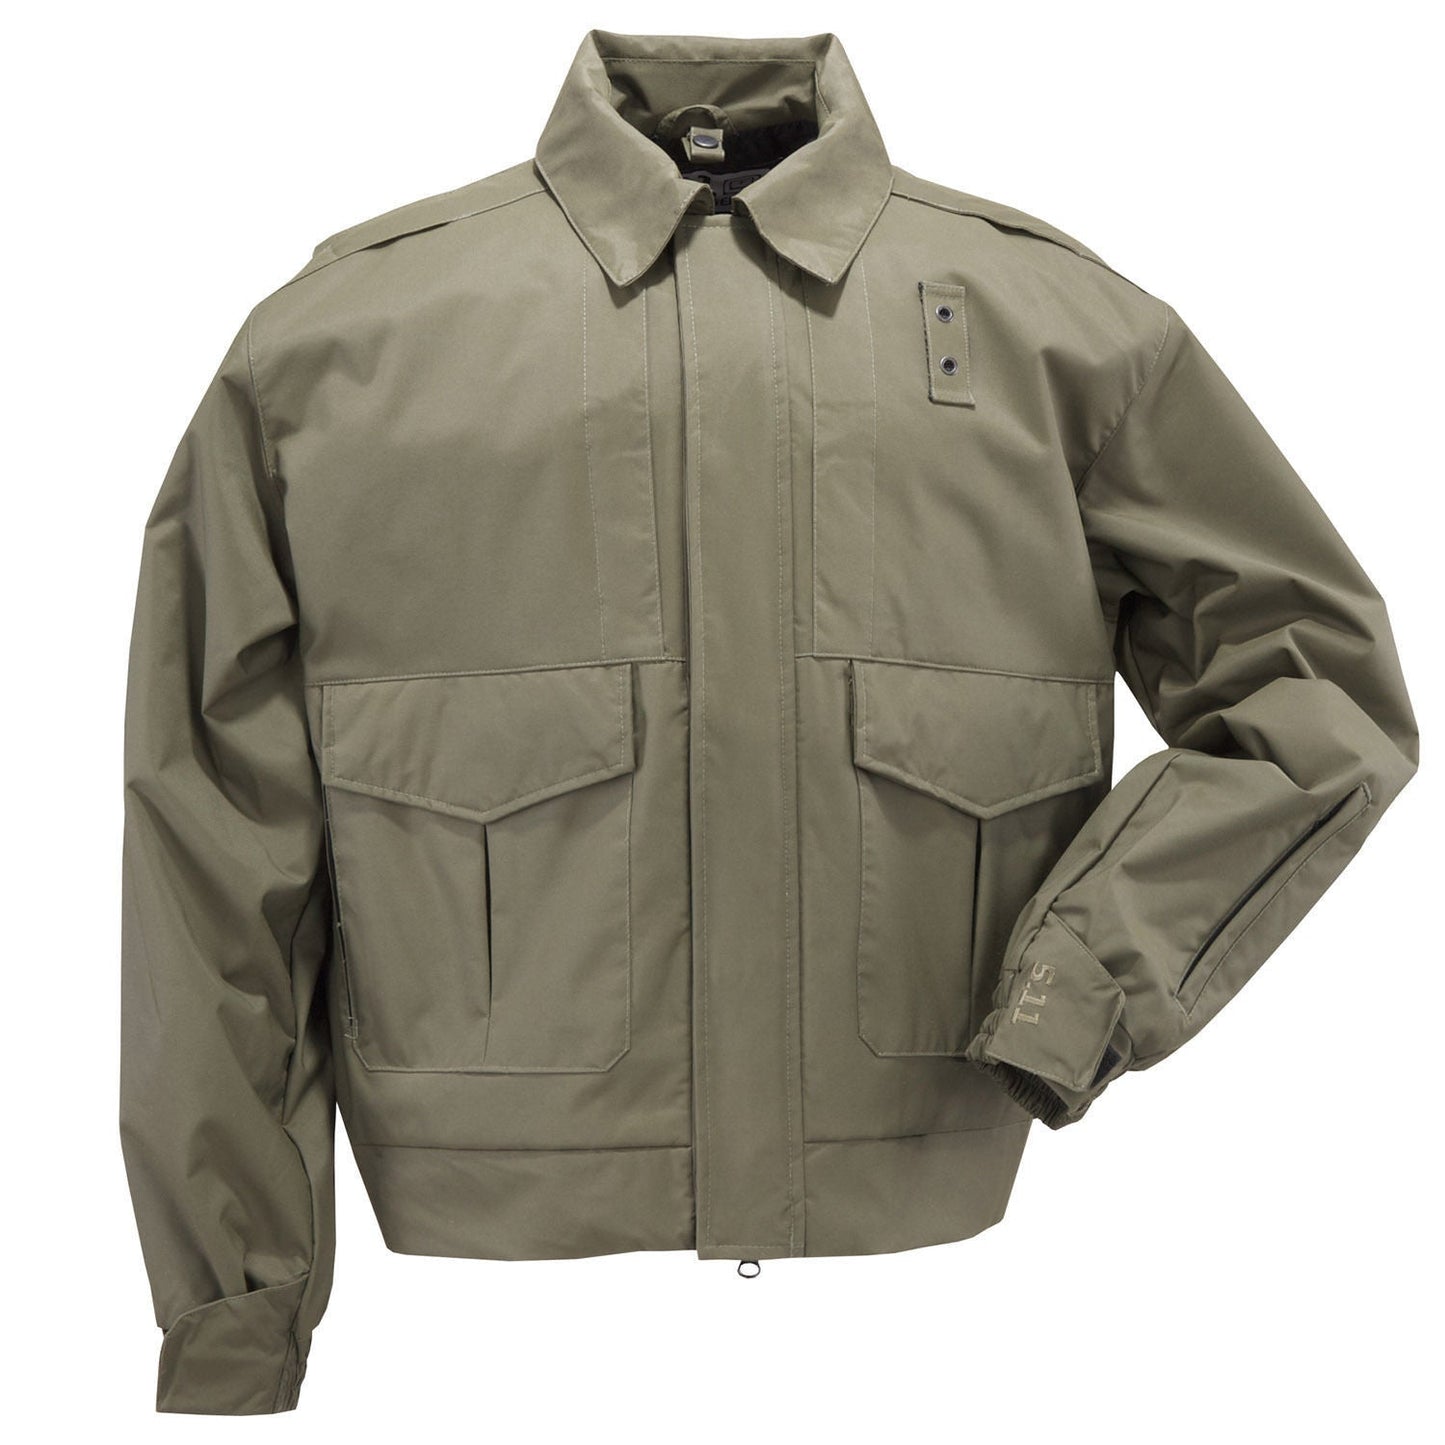 5.11 Tactical 4-In-1 Patrol Jacket - Men's All Season Jacket w/ Removable Liner